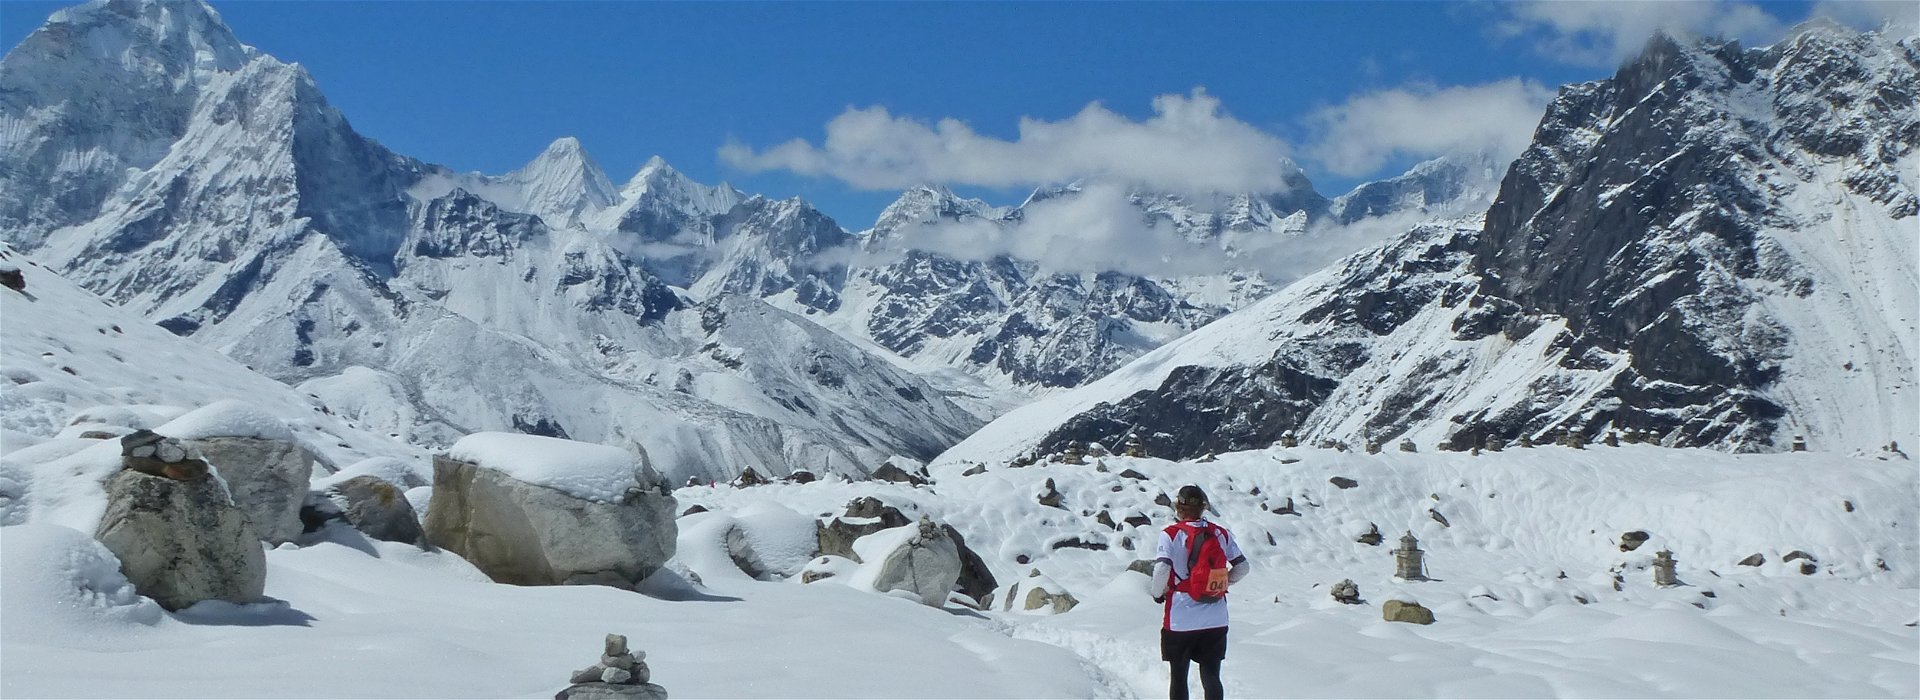 Mount Everest Marathon – An Experience of a Lifetime